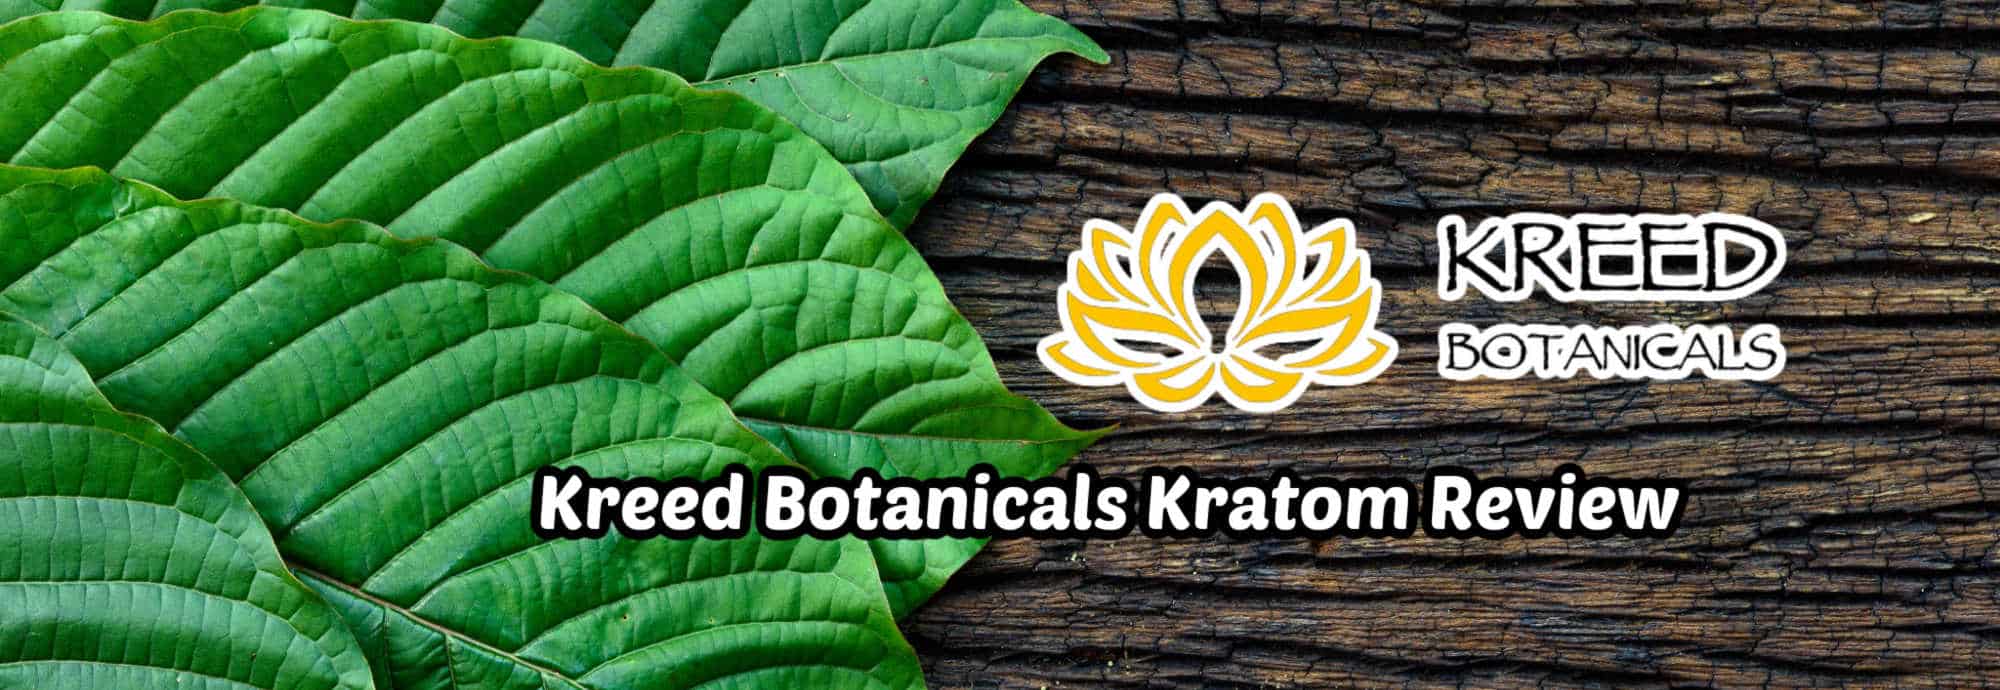 image of kreed botanicals kratom review